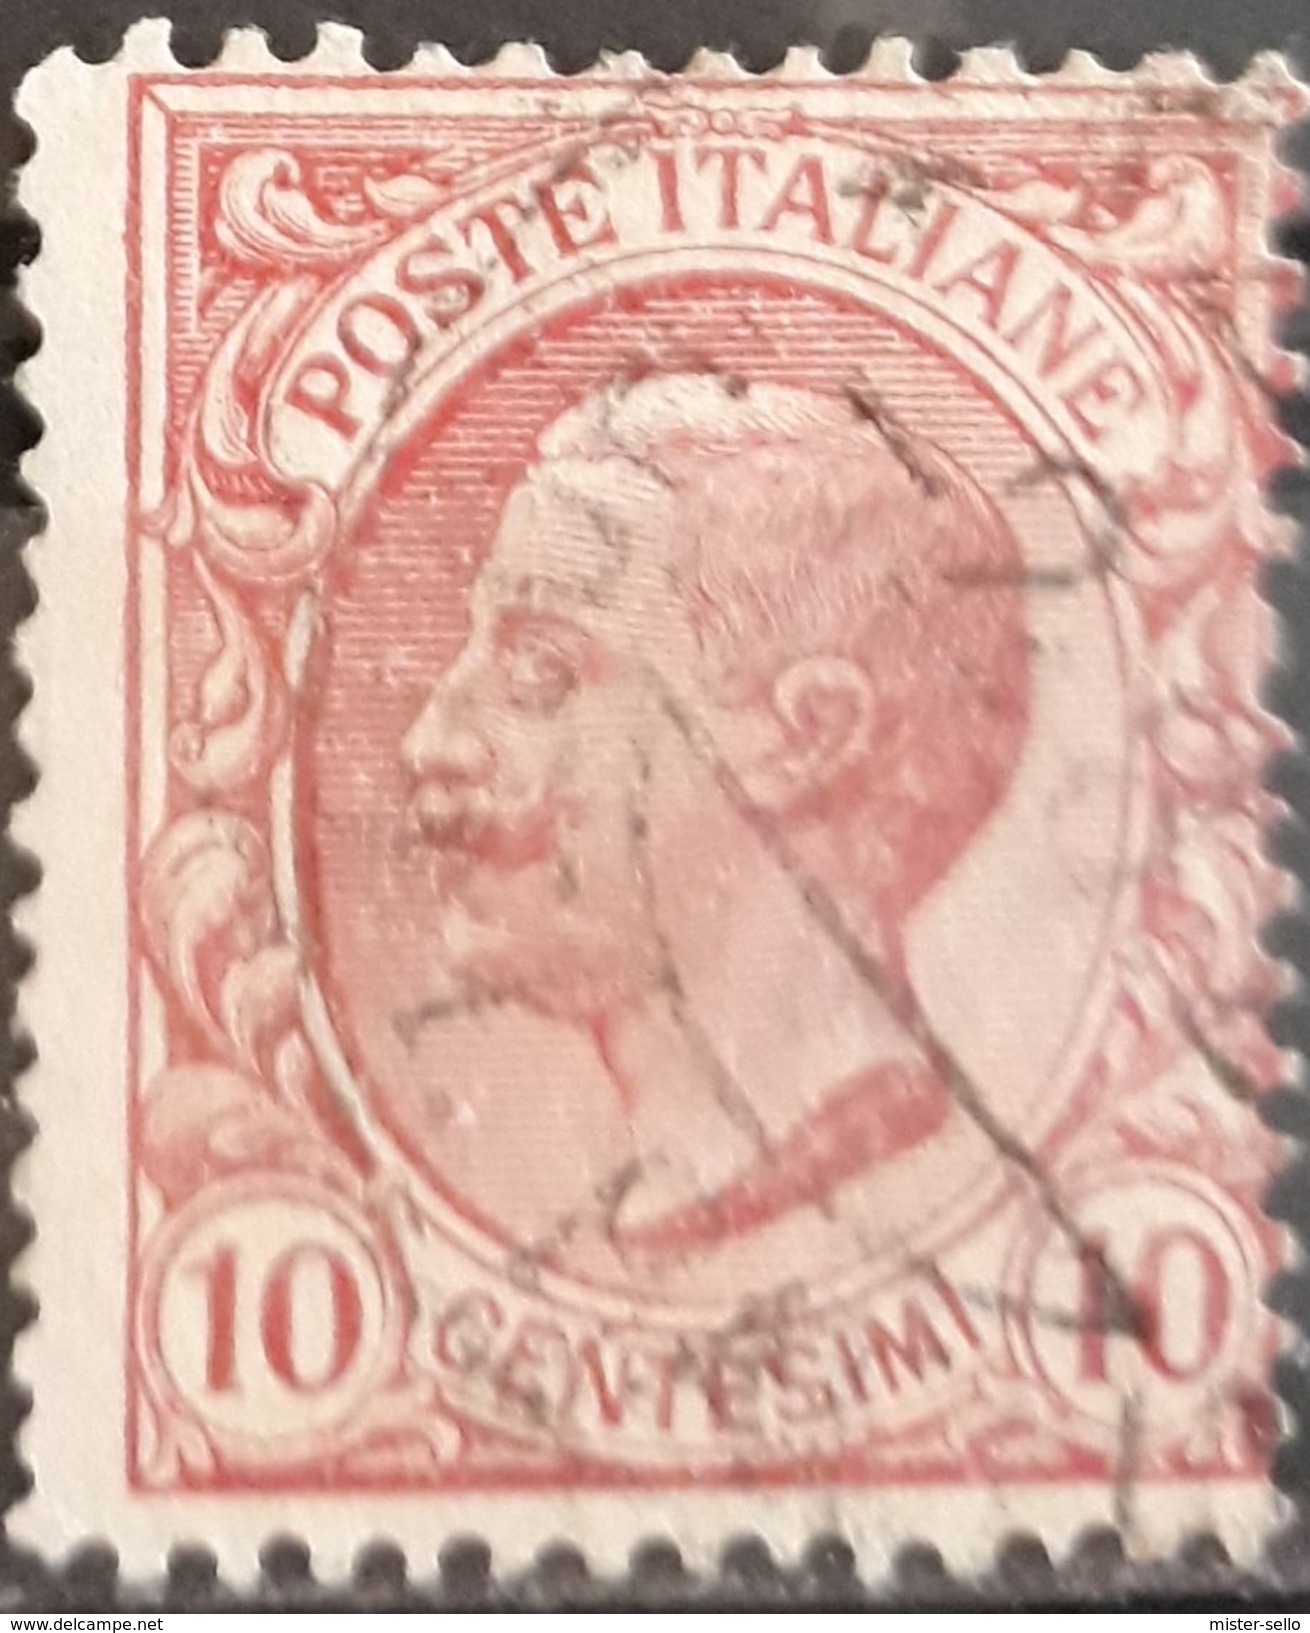 ITALIA 1906 King Victor Emmanuel III. USADO - USED. - Usados